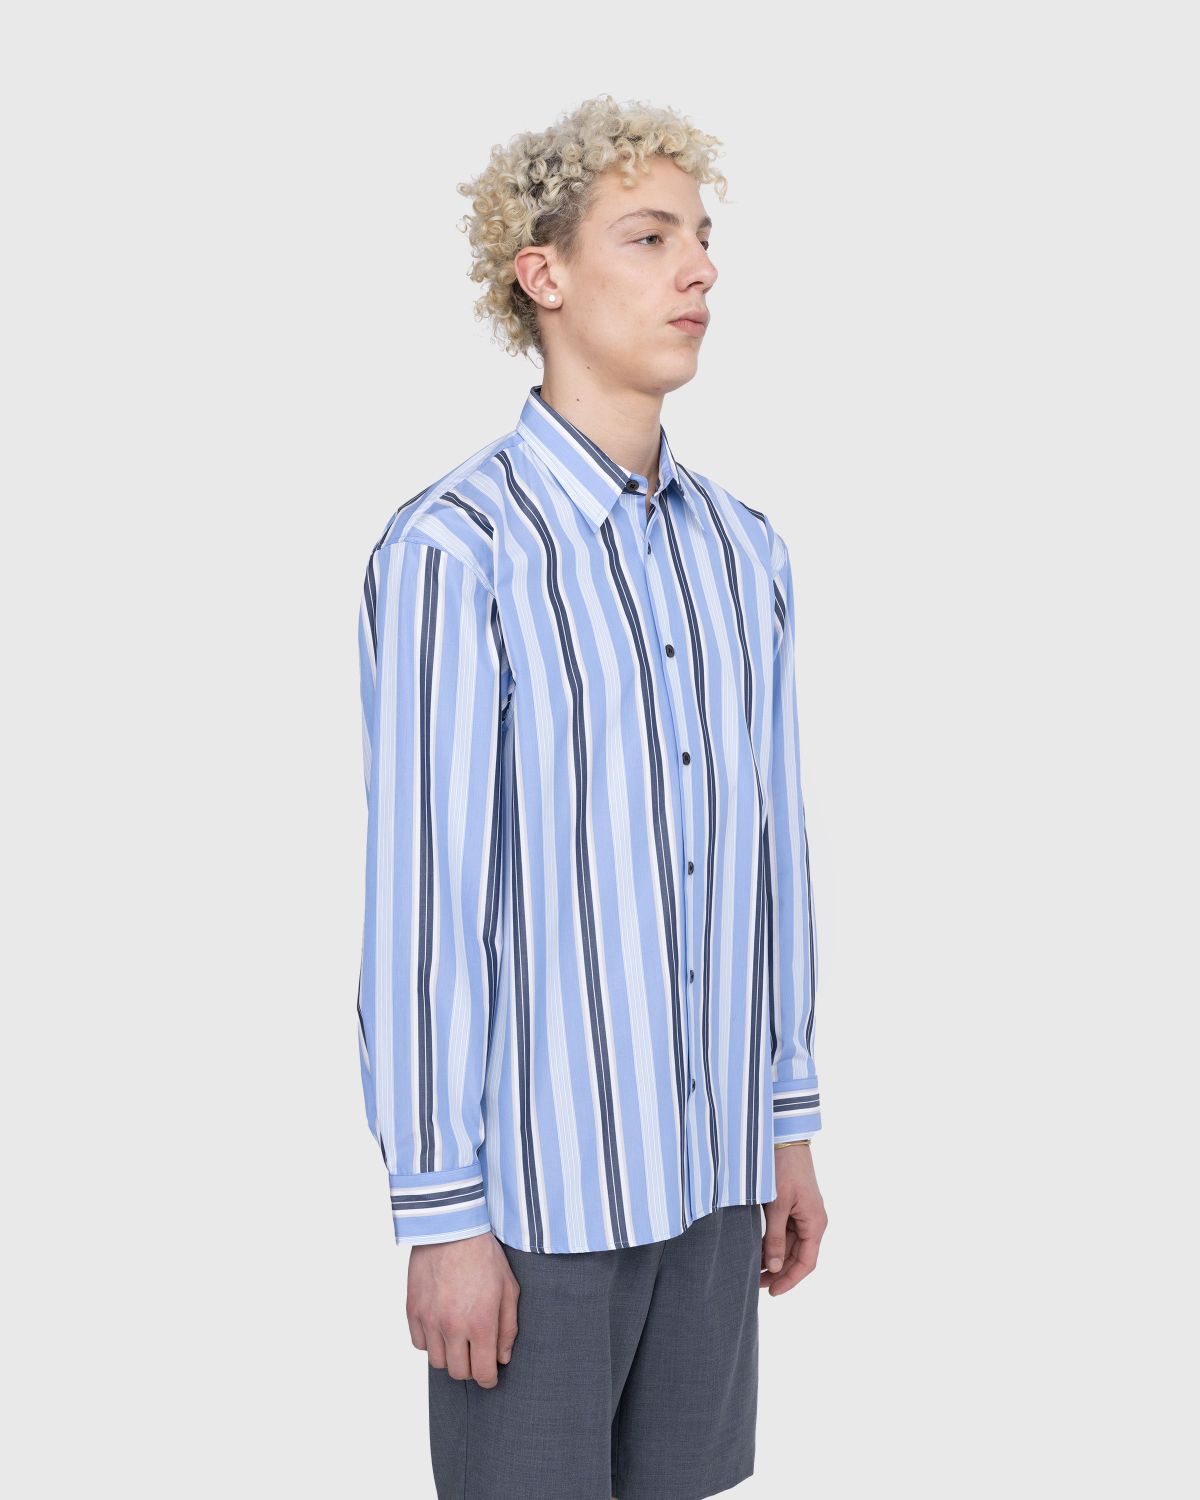 Dries van Noten – Croom Shirt Light Blue - Shirts - Blue - Image 4